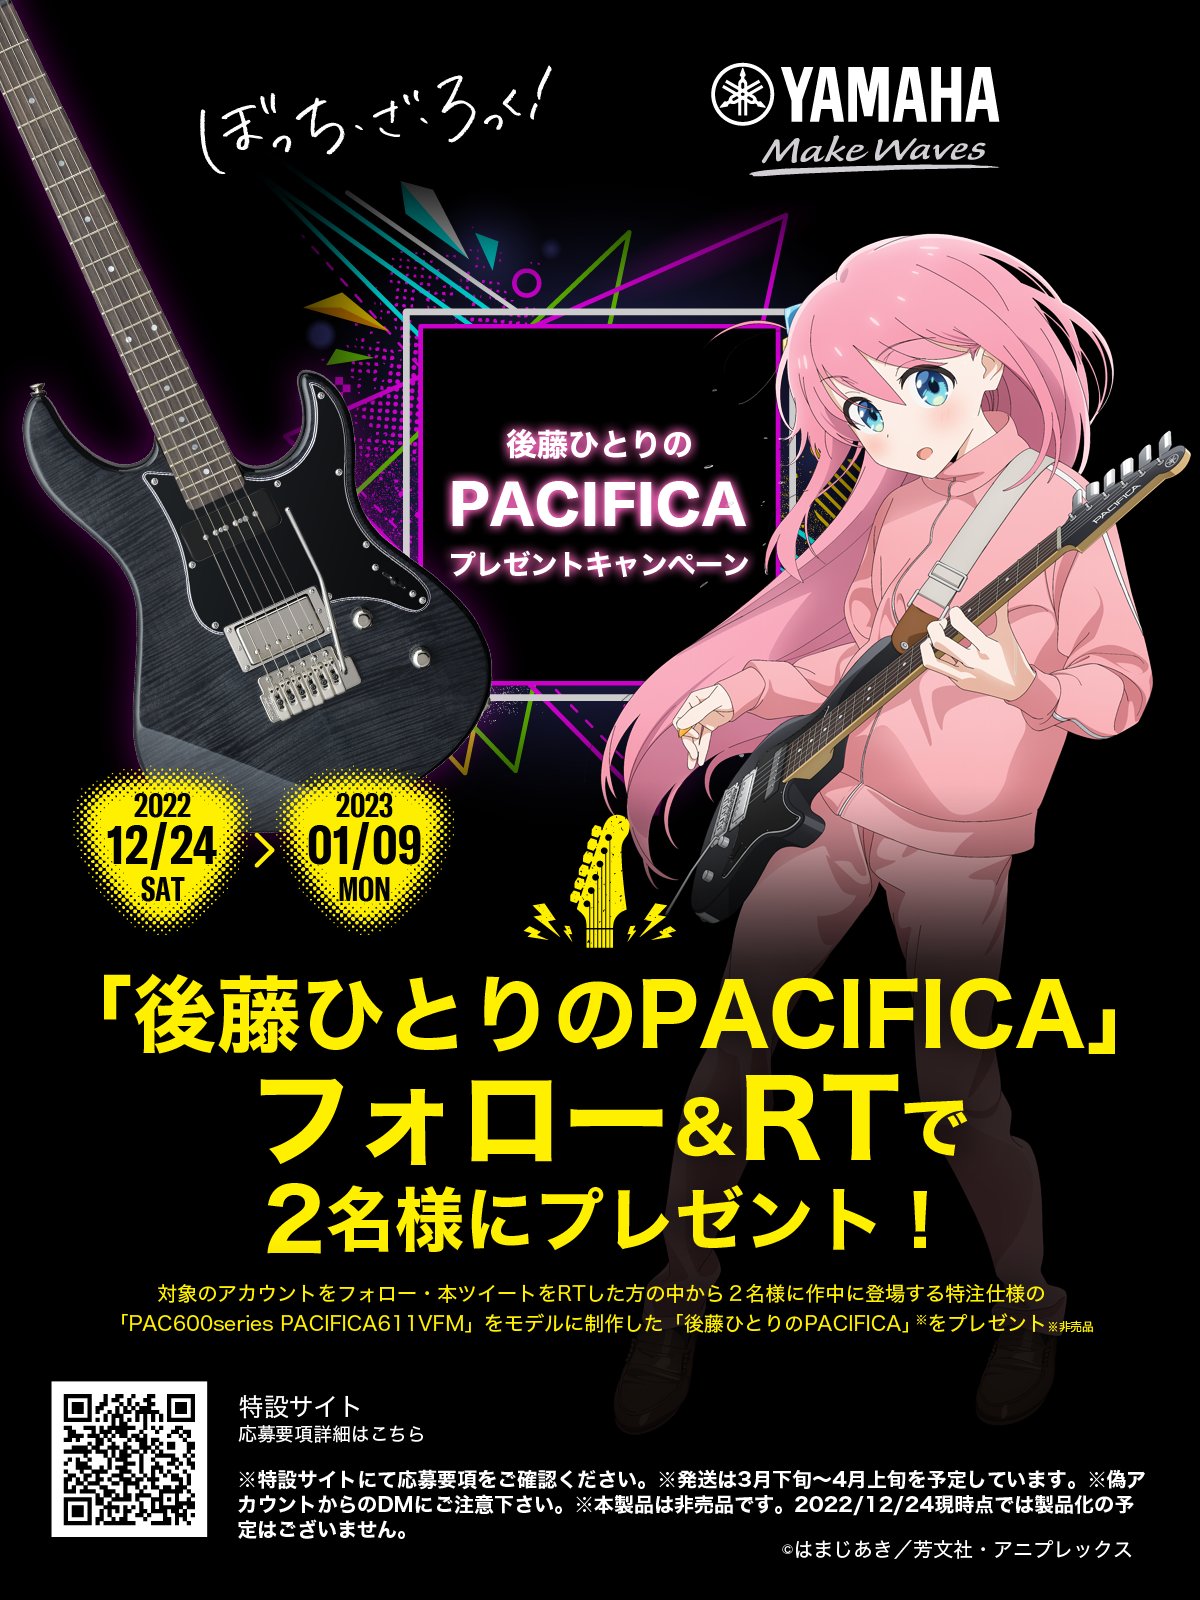 YAMAHA pacifica 212 ぼっちざろっく 後藤ひとり仕様 - エレキギター